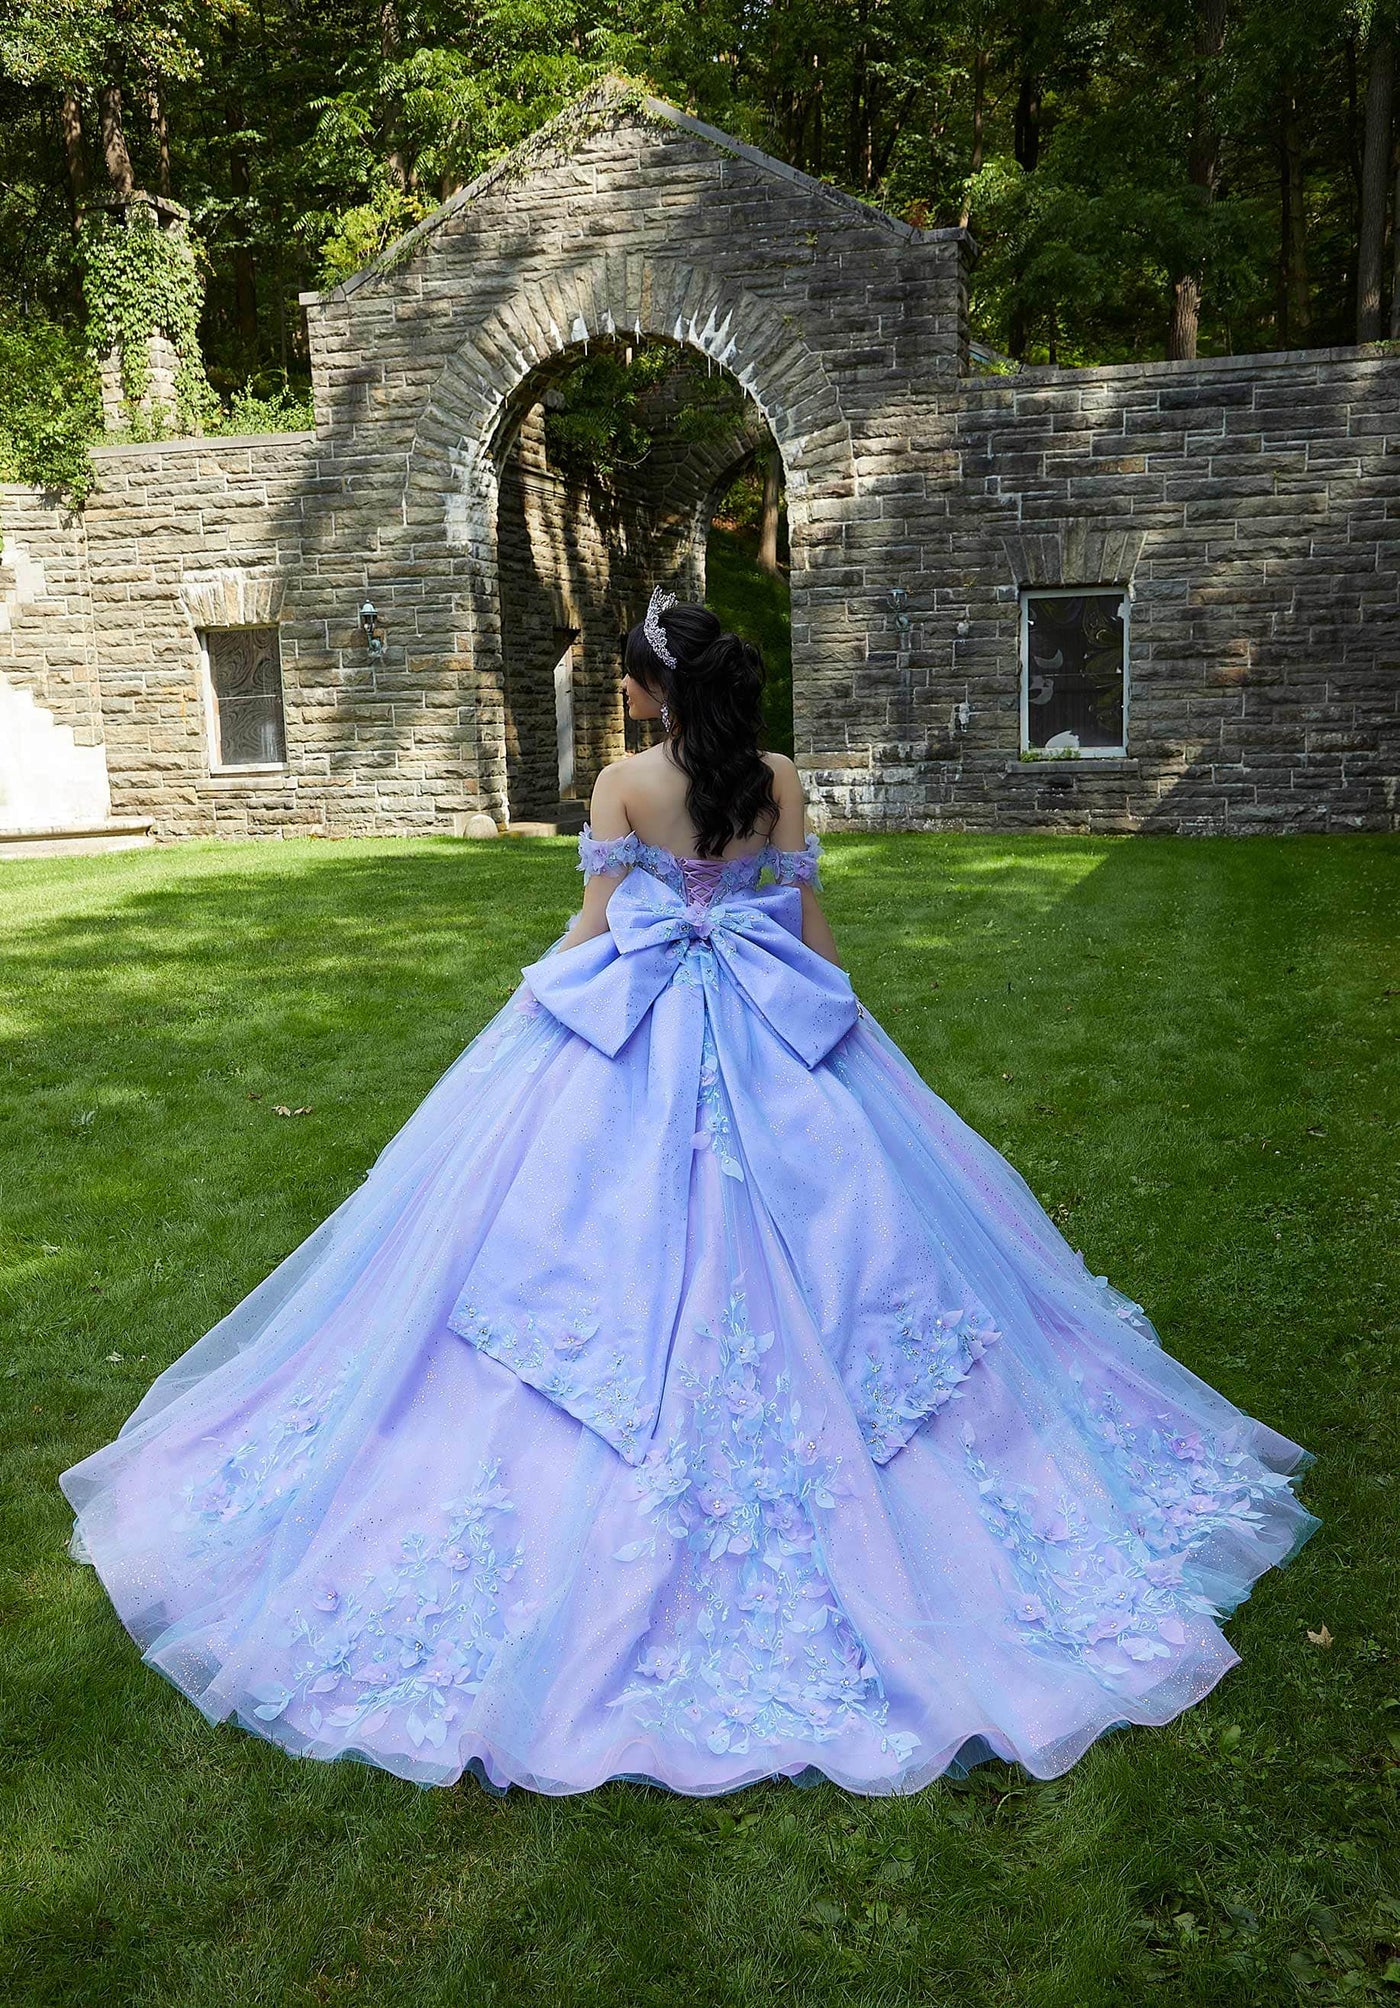 Vizcaya by Mori Lee 89448 - 3D Floral Embellishments Corset Bodice Ballgown Ball Gown